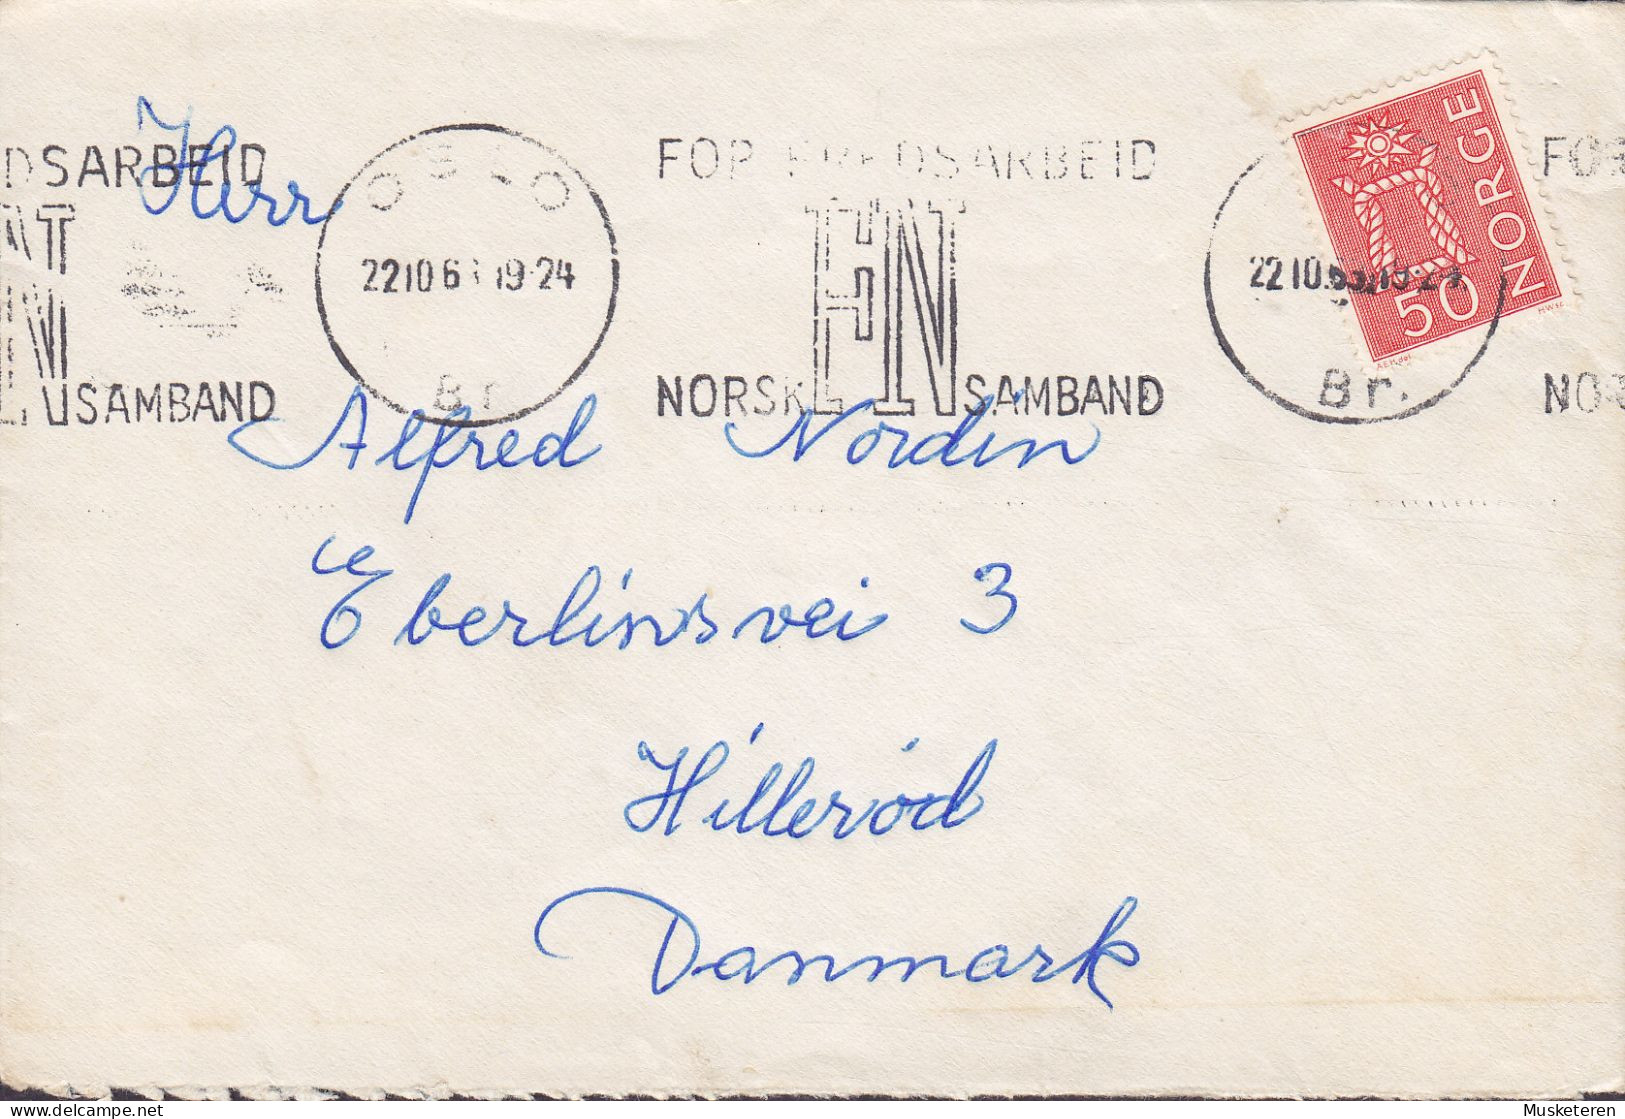 Norway Slogan 'For Fredsarbeid FN Norske Samband' OSLO 1965? 'Petite' Cover Brief Lettre HILLERØD Denmark - Lettres & Documents